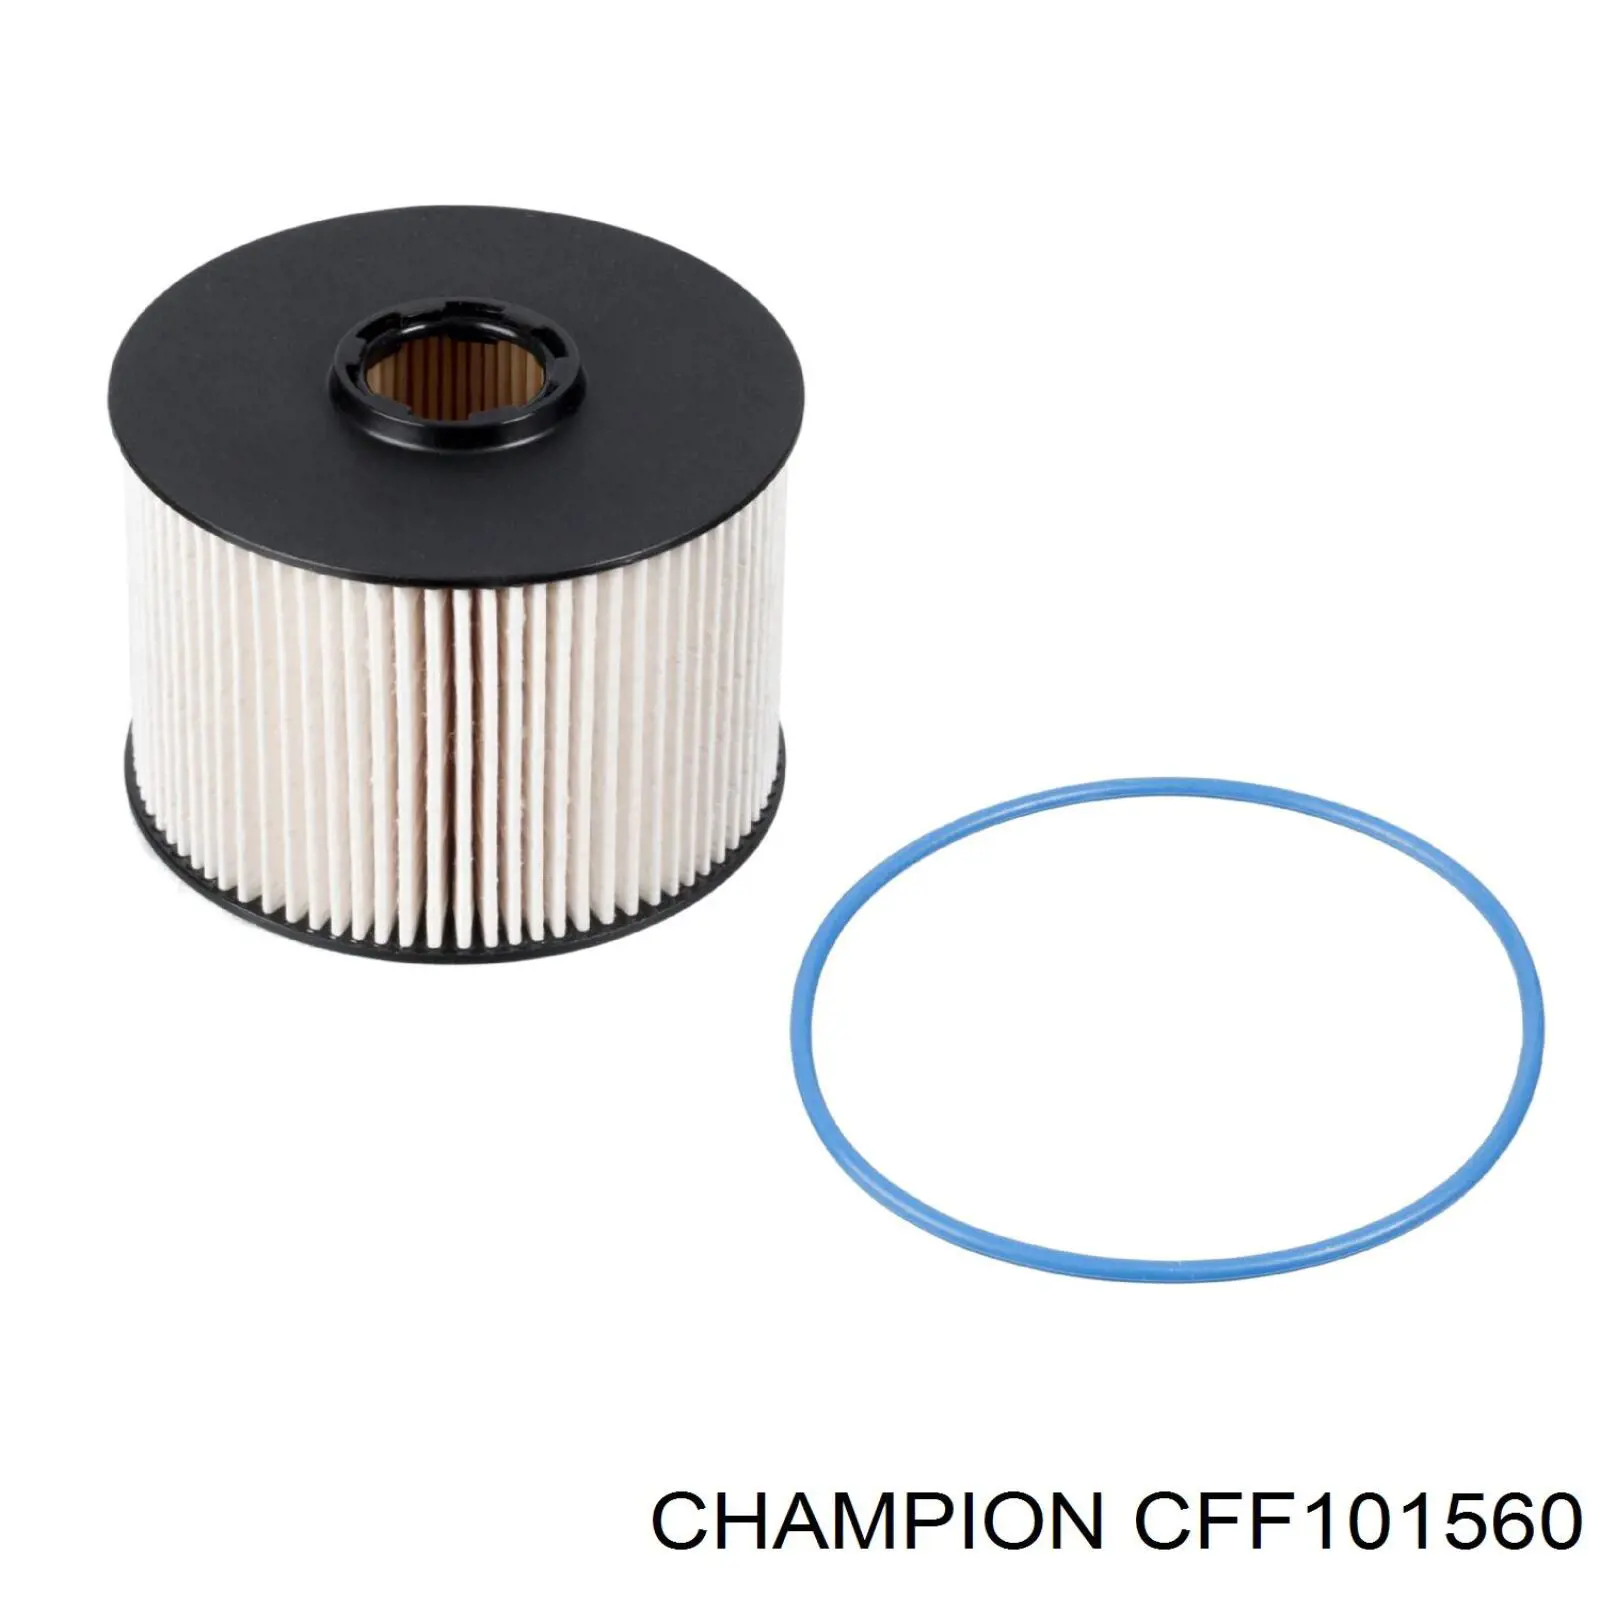 CFF101560 Champion filtro combustible